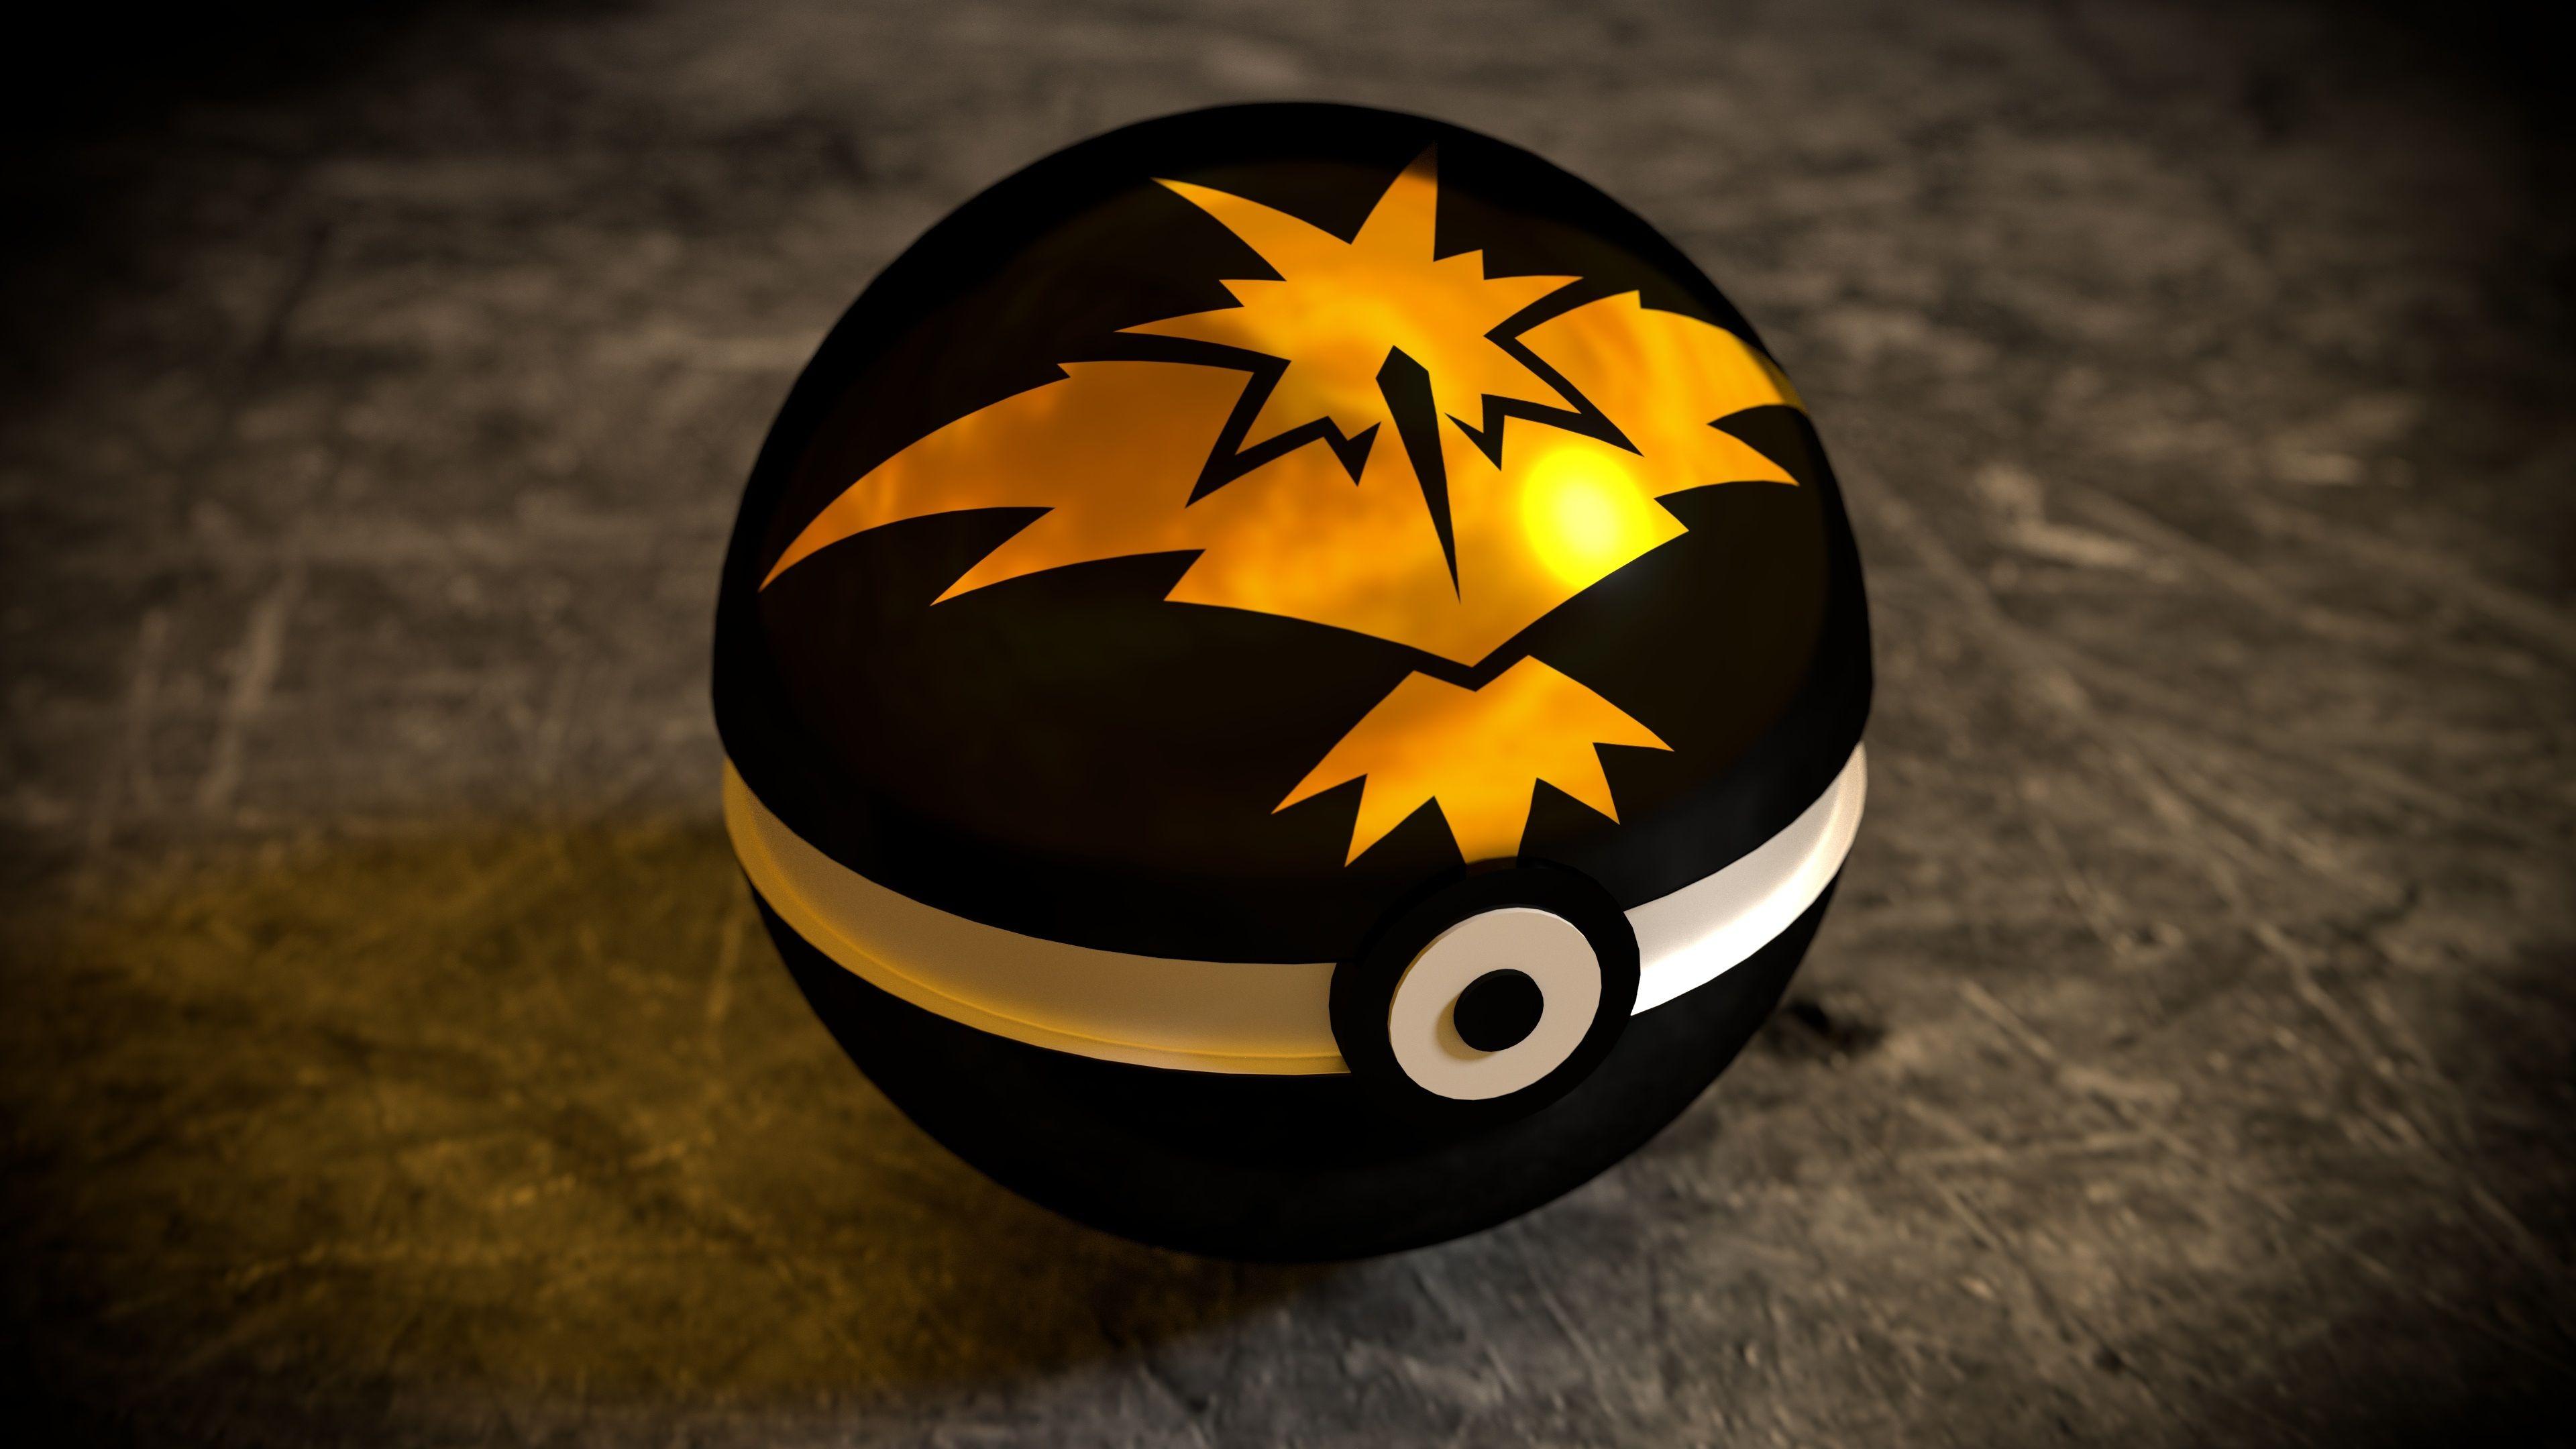 Brown and Yellow Team Logo - Wallpaper Pokeball, Pokemon GO, Team Yellow, Team Instinct, 4K ...